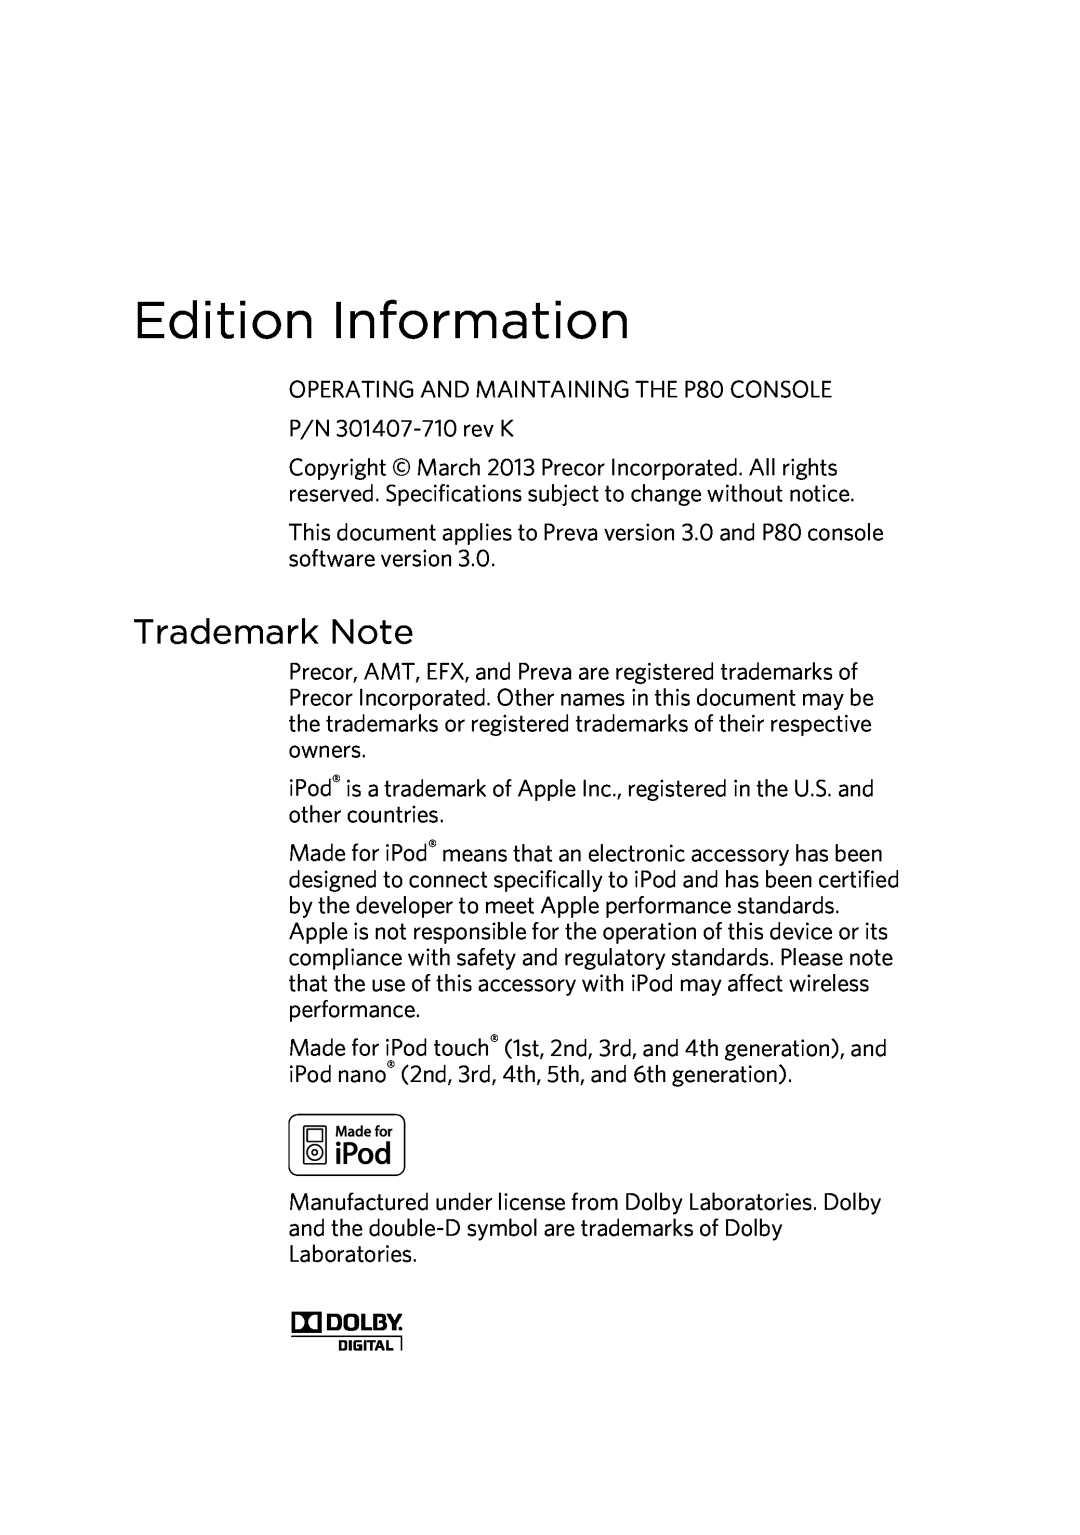 Precor P80 manual Edition Information, Trademark Note 